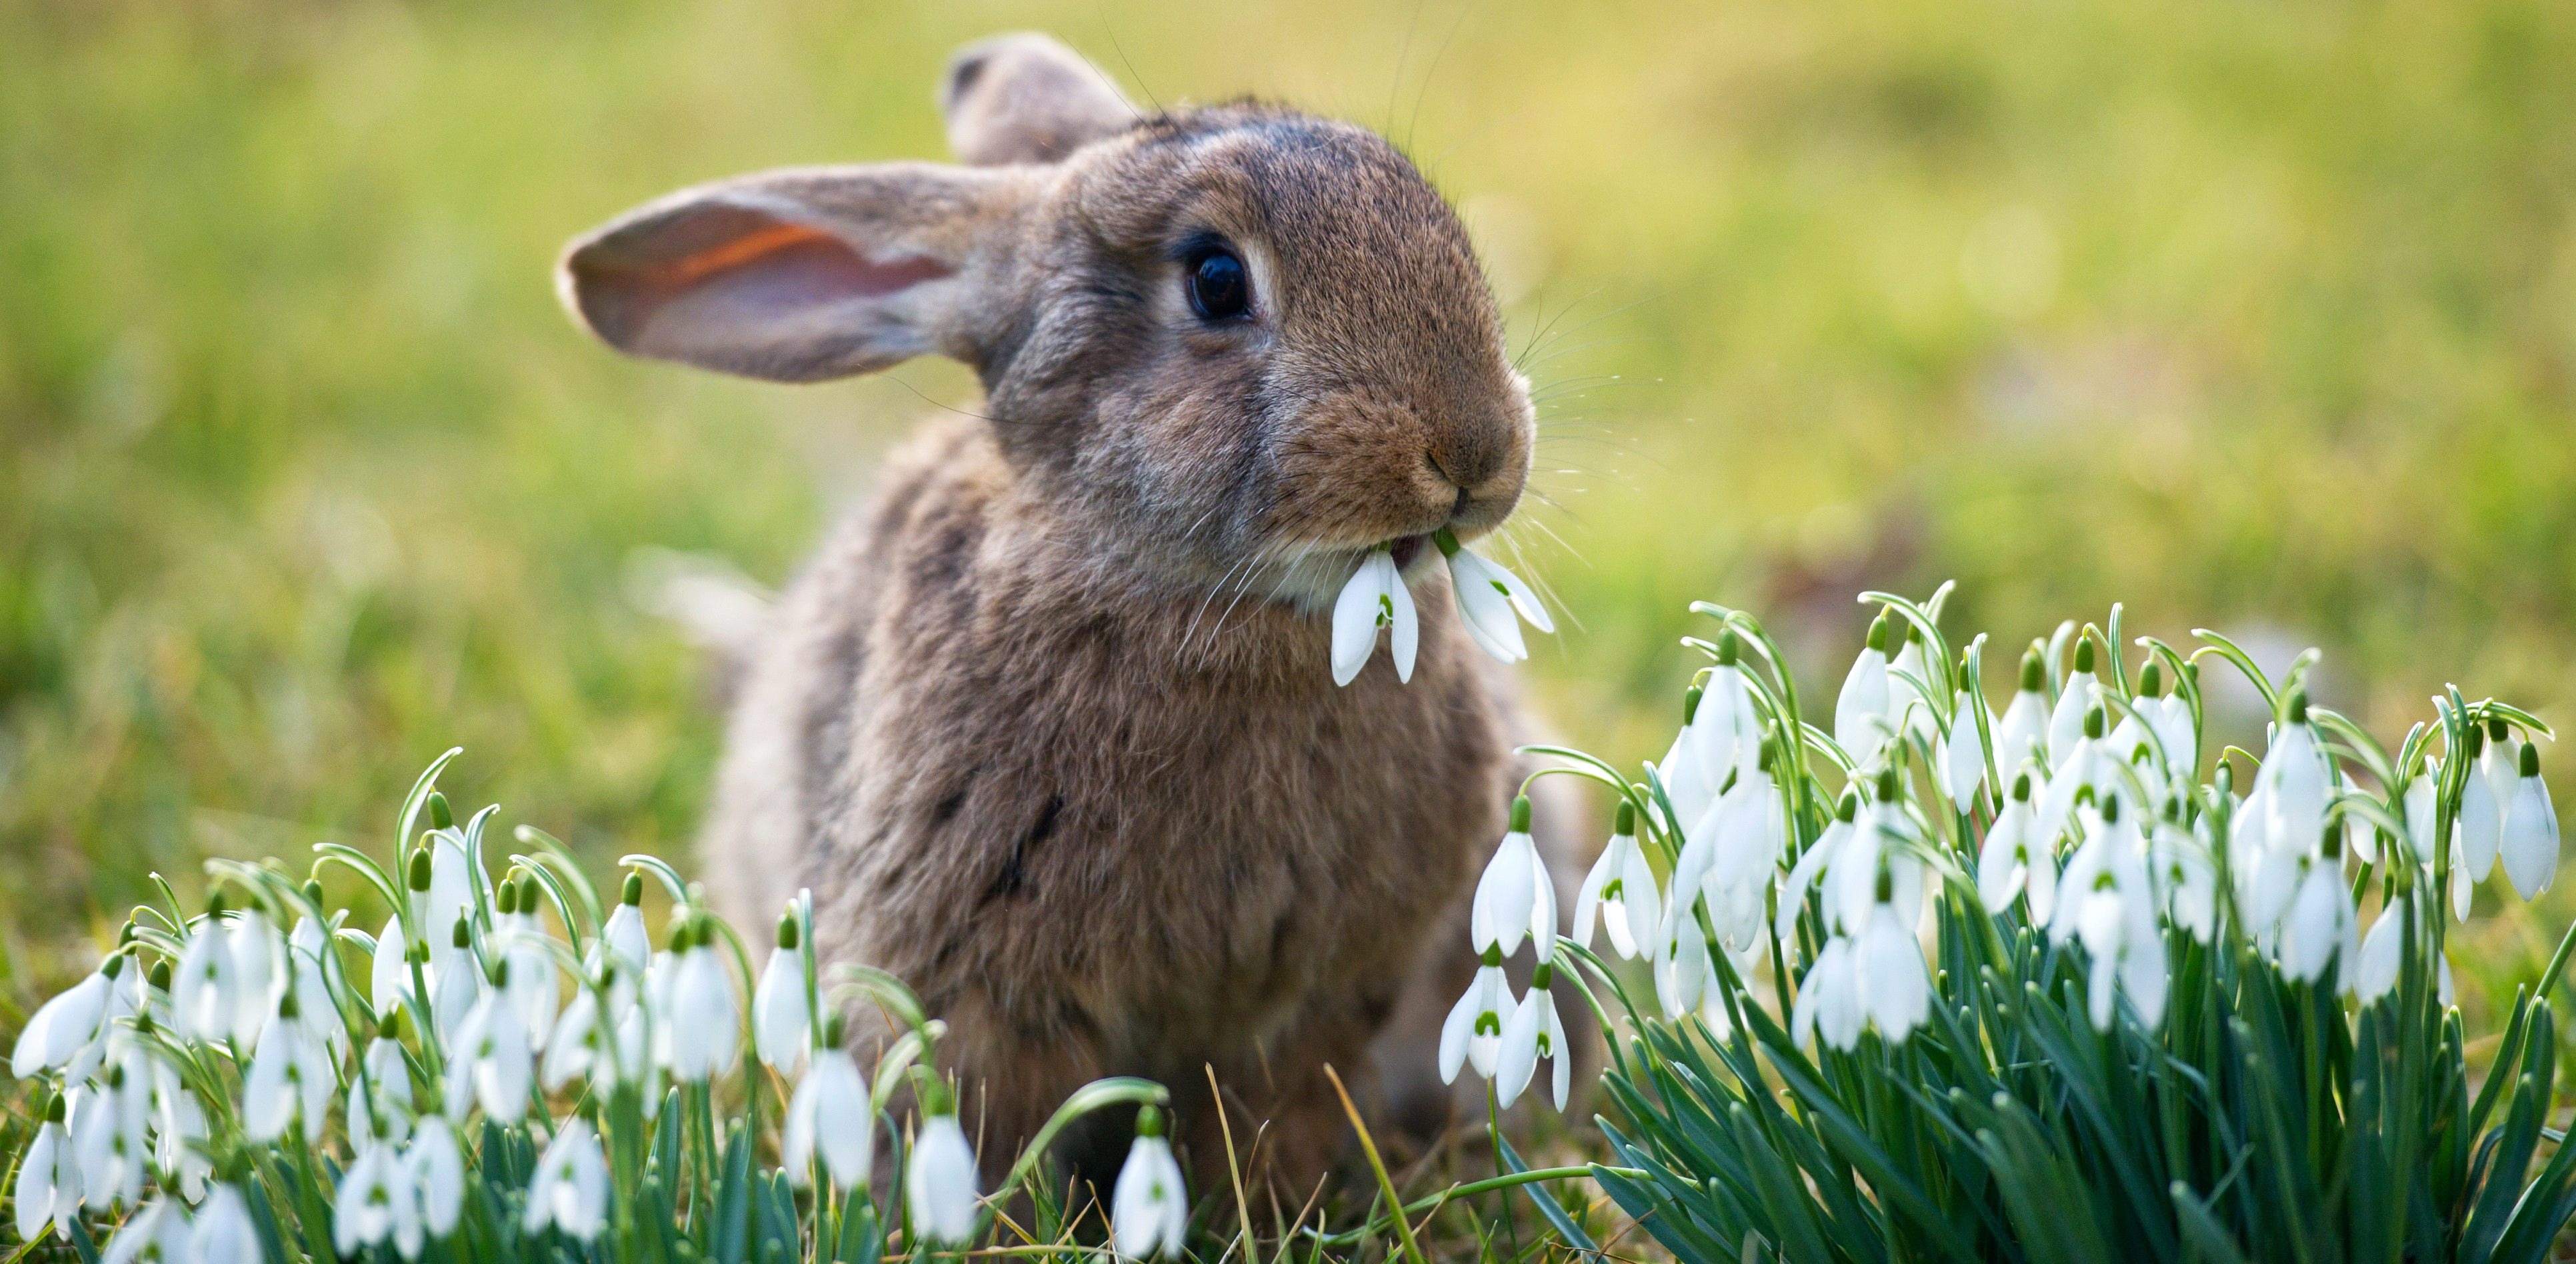 Шотландски остров ще избие хиляди зайци